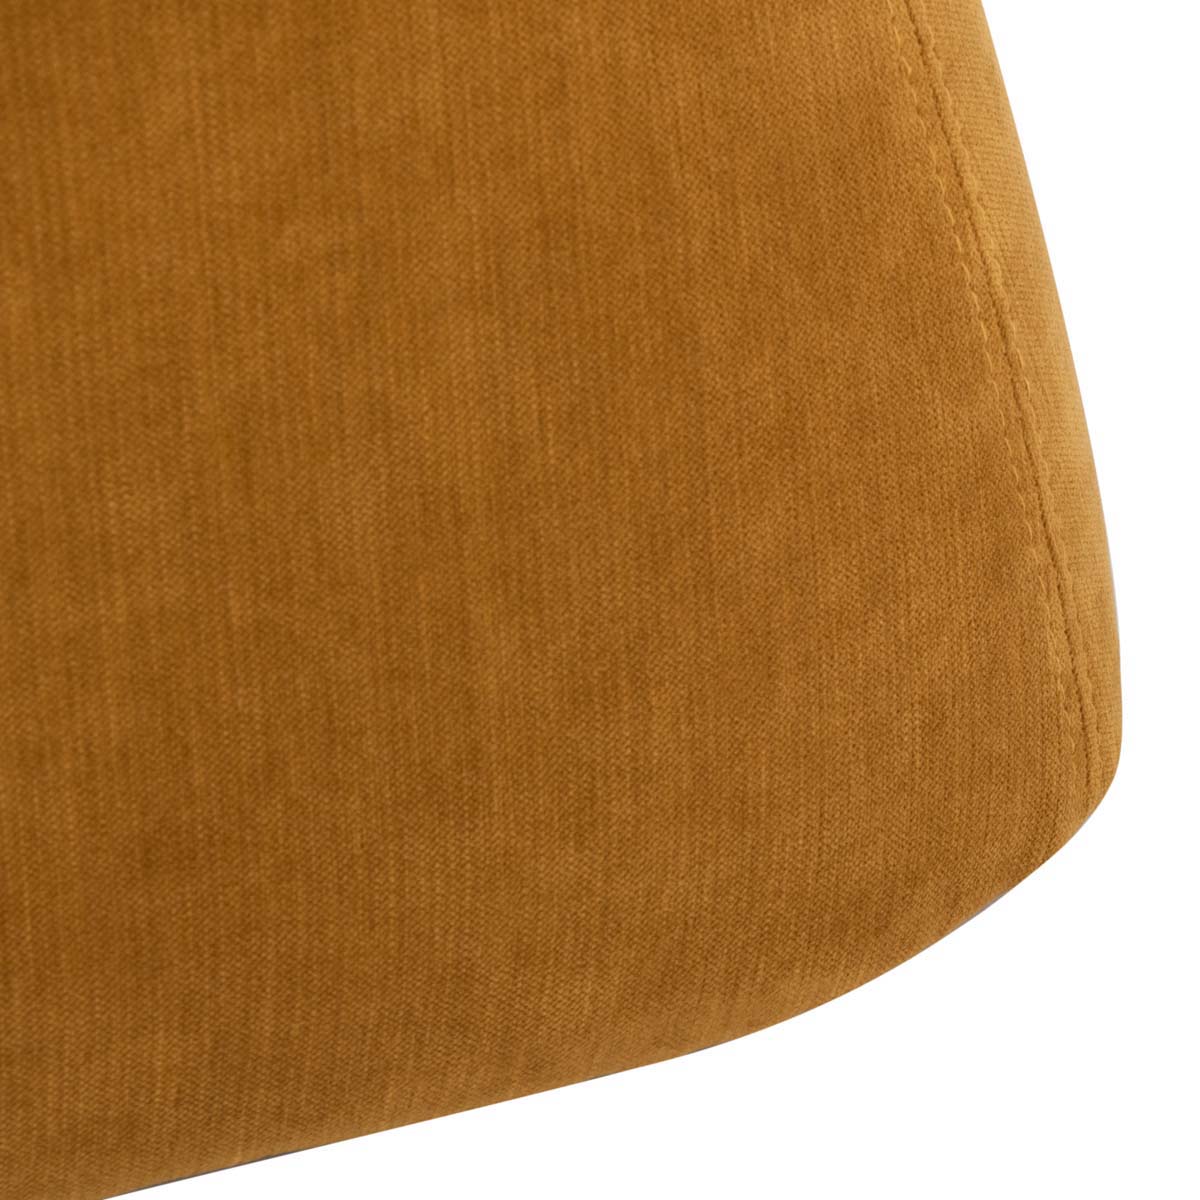 Safavieh Couture Kiana Modern Accent Chair - Mustard